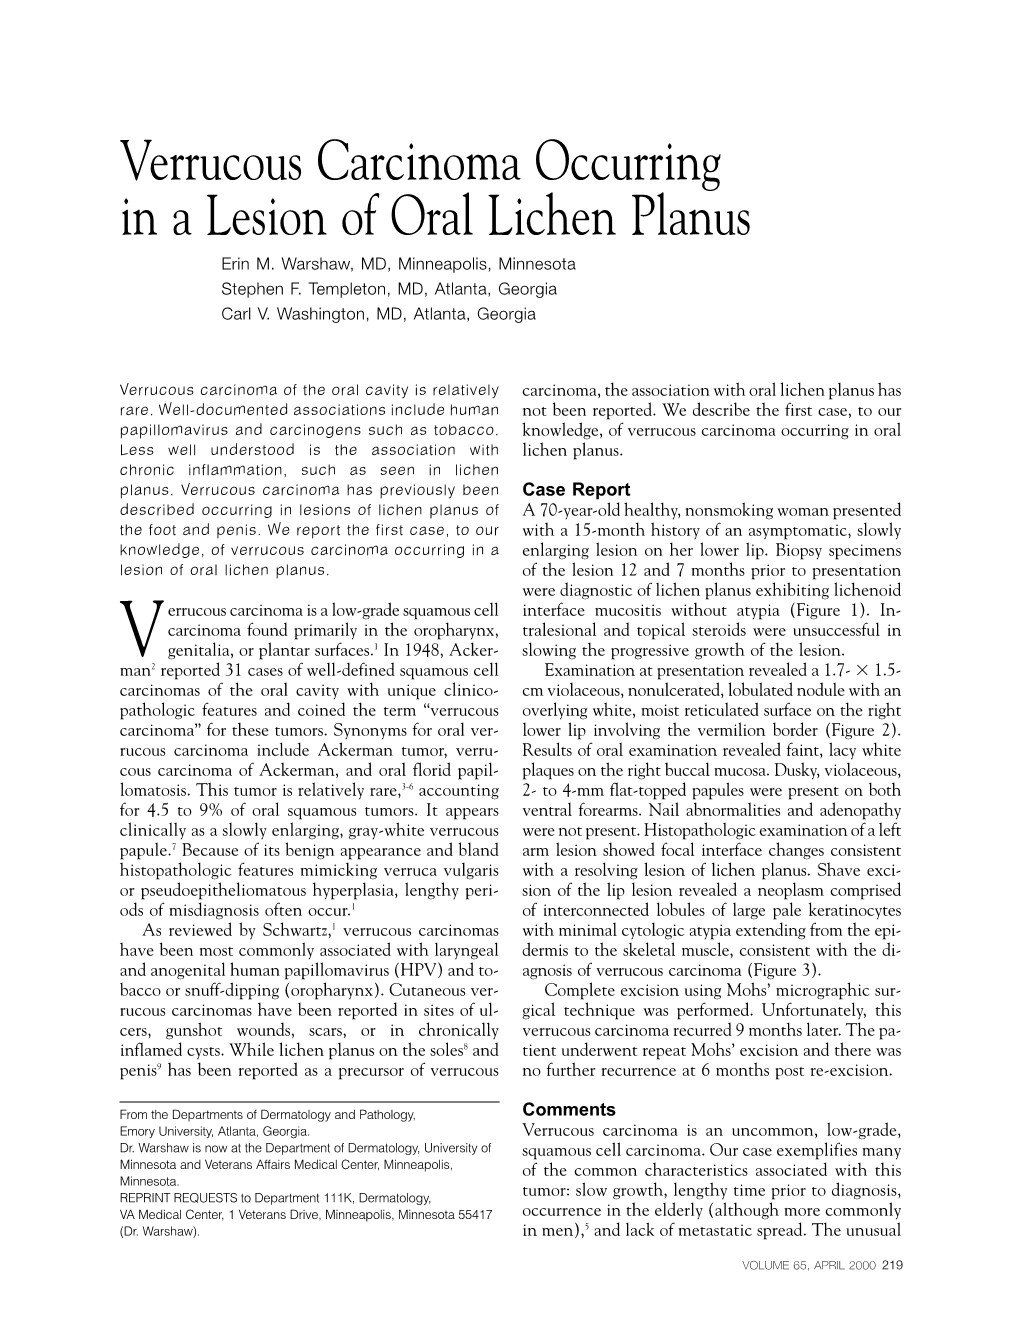 Verrucous Carcinoma Occurring in a Lesion of Oral Lichen Planus Erin M